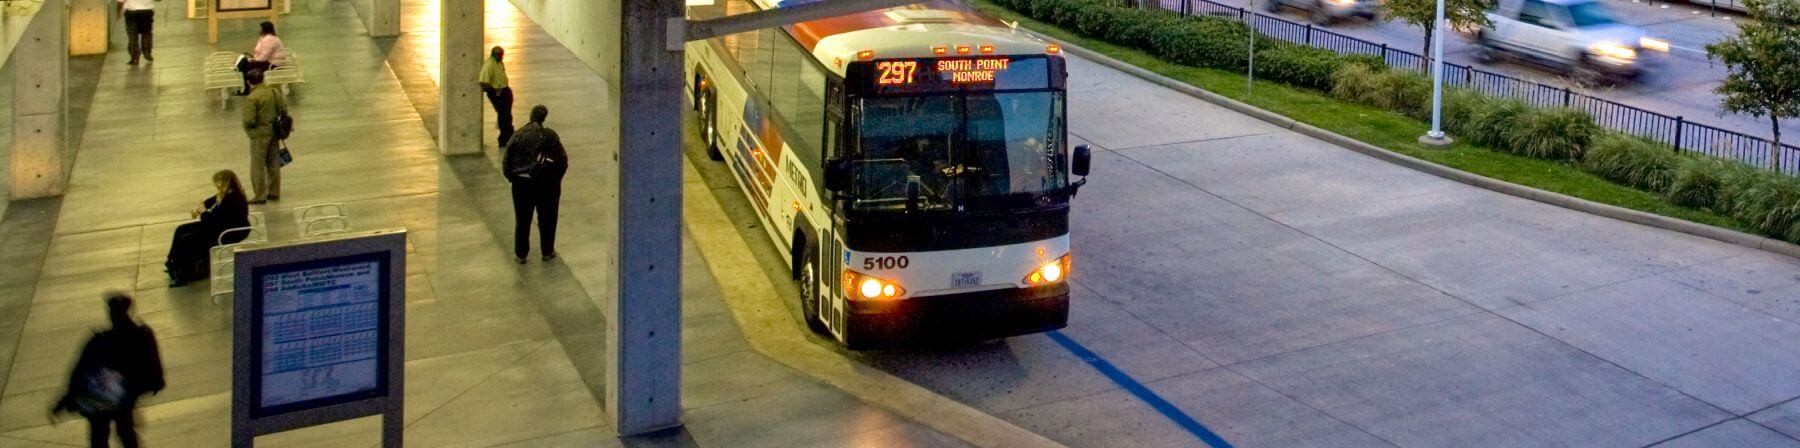 297 South Point / Monroe / TMC Park & Ride bus at Texas Medical Center Transit Center.